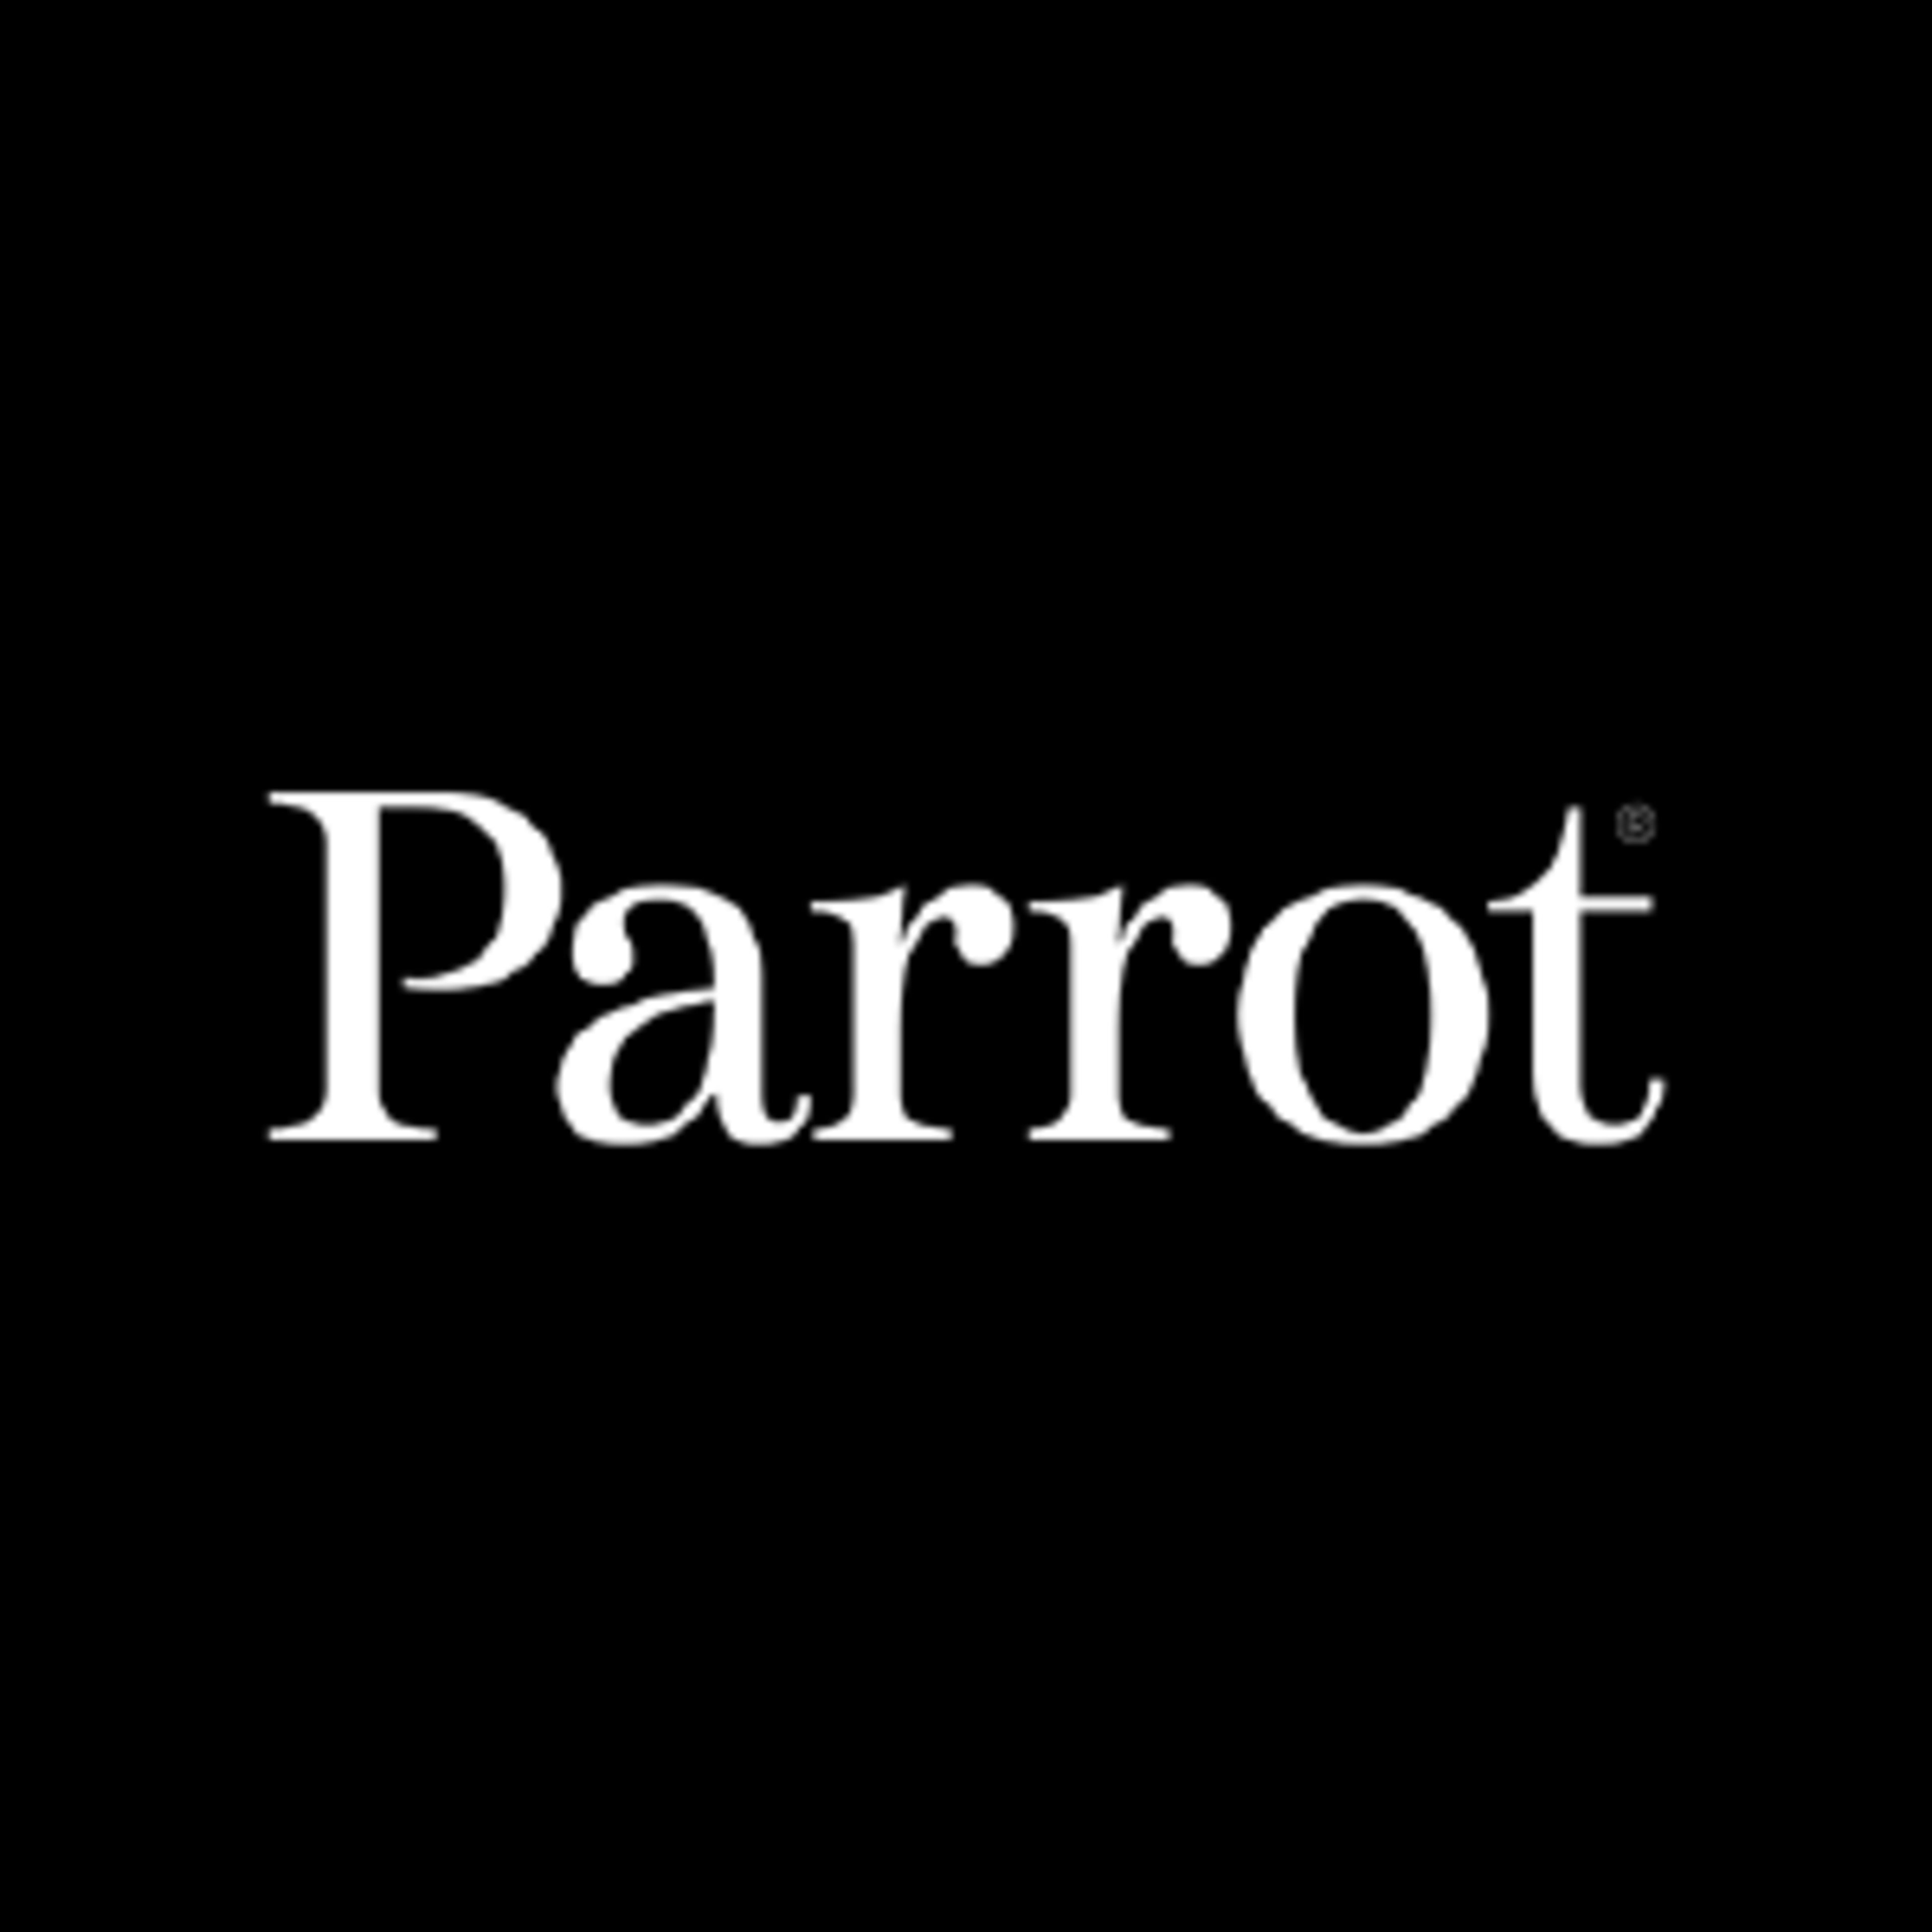 Parrot USACode